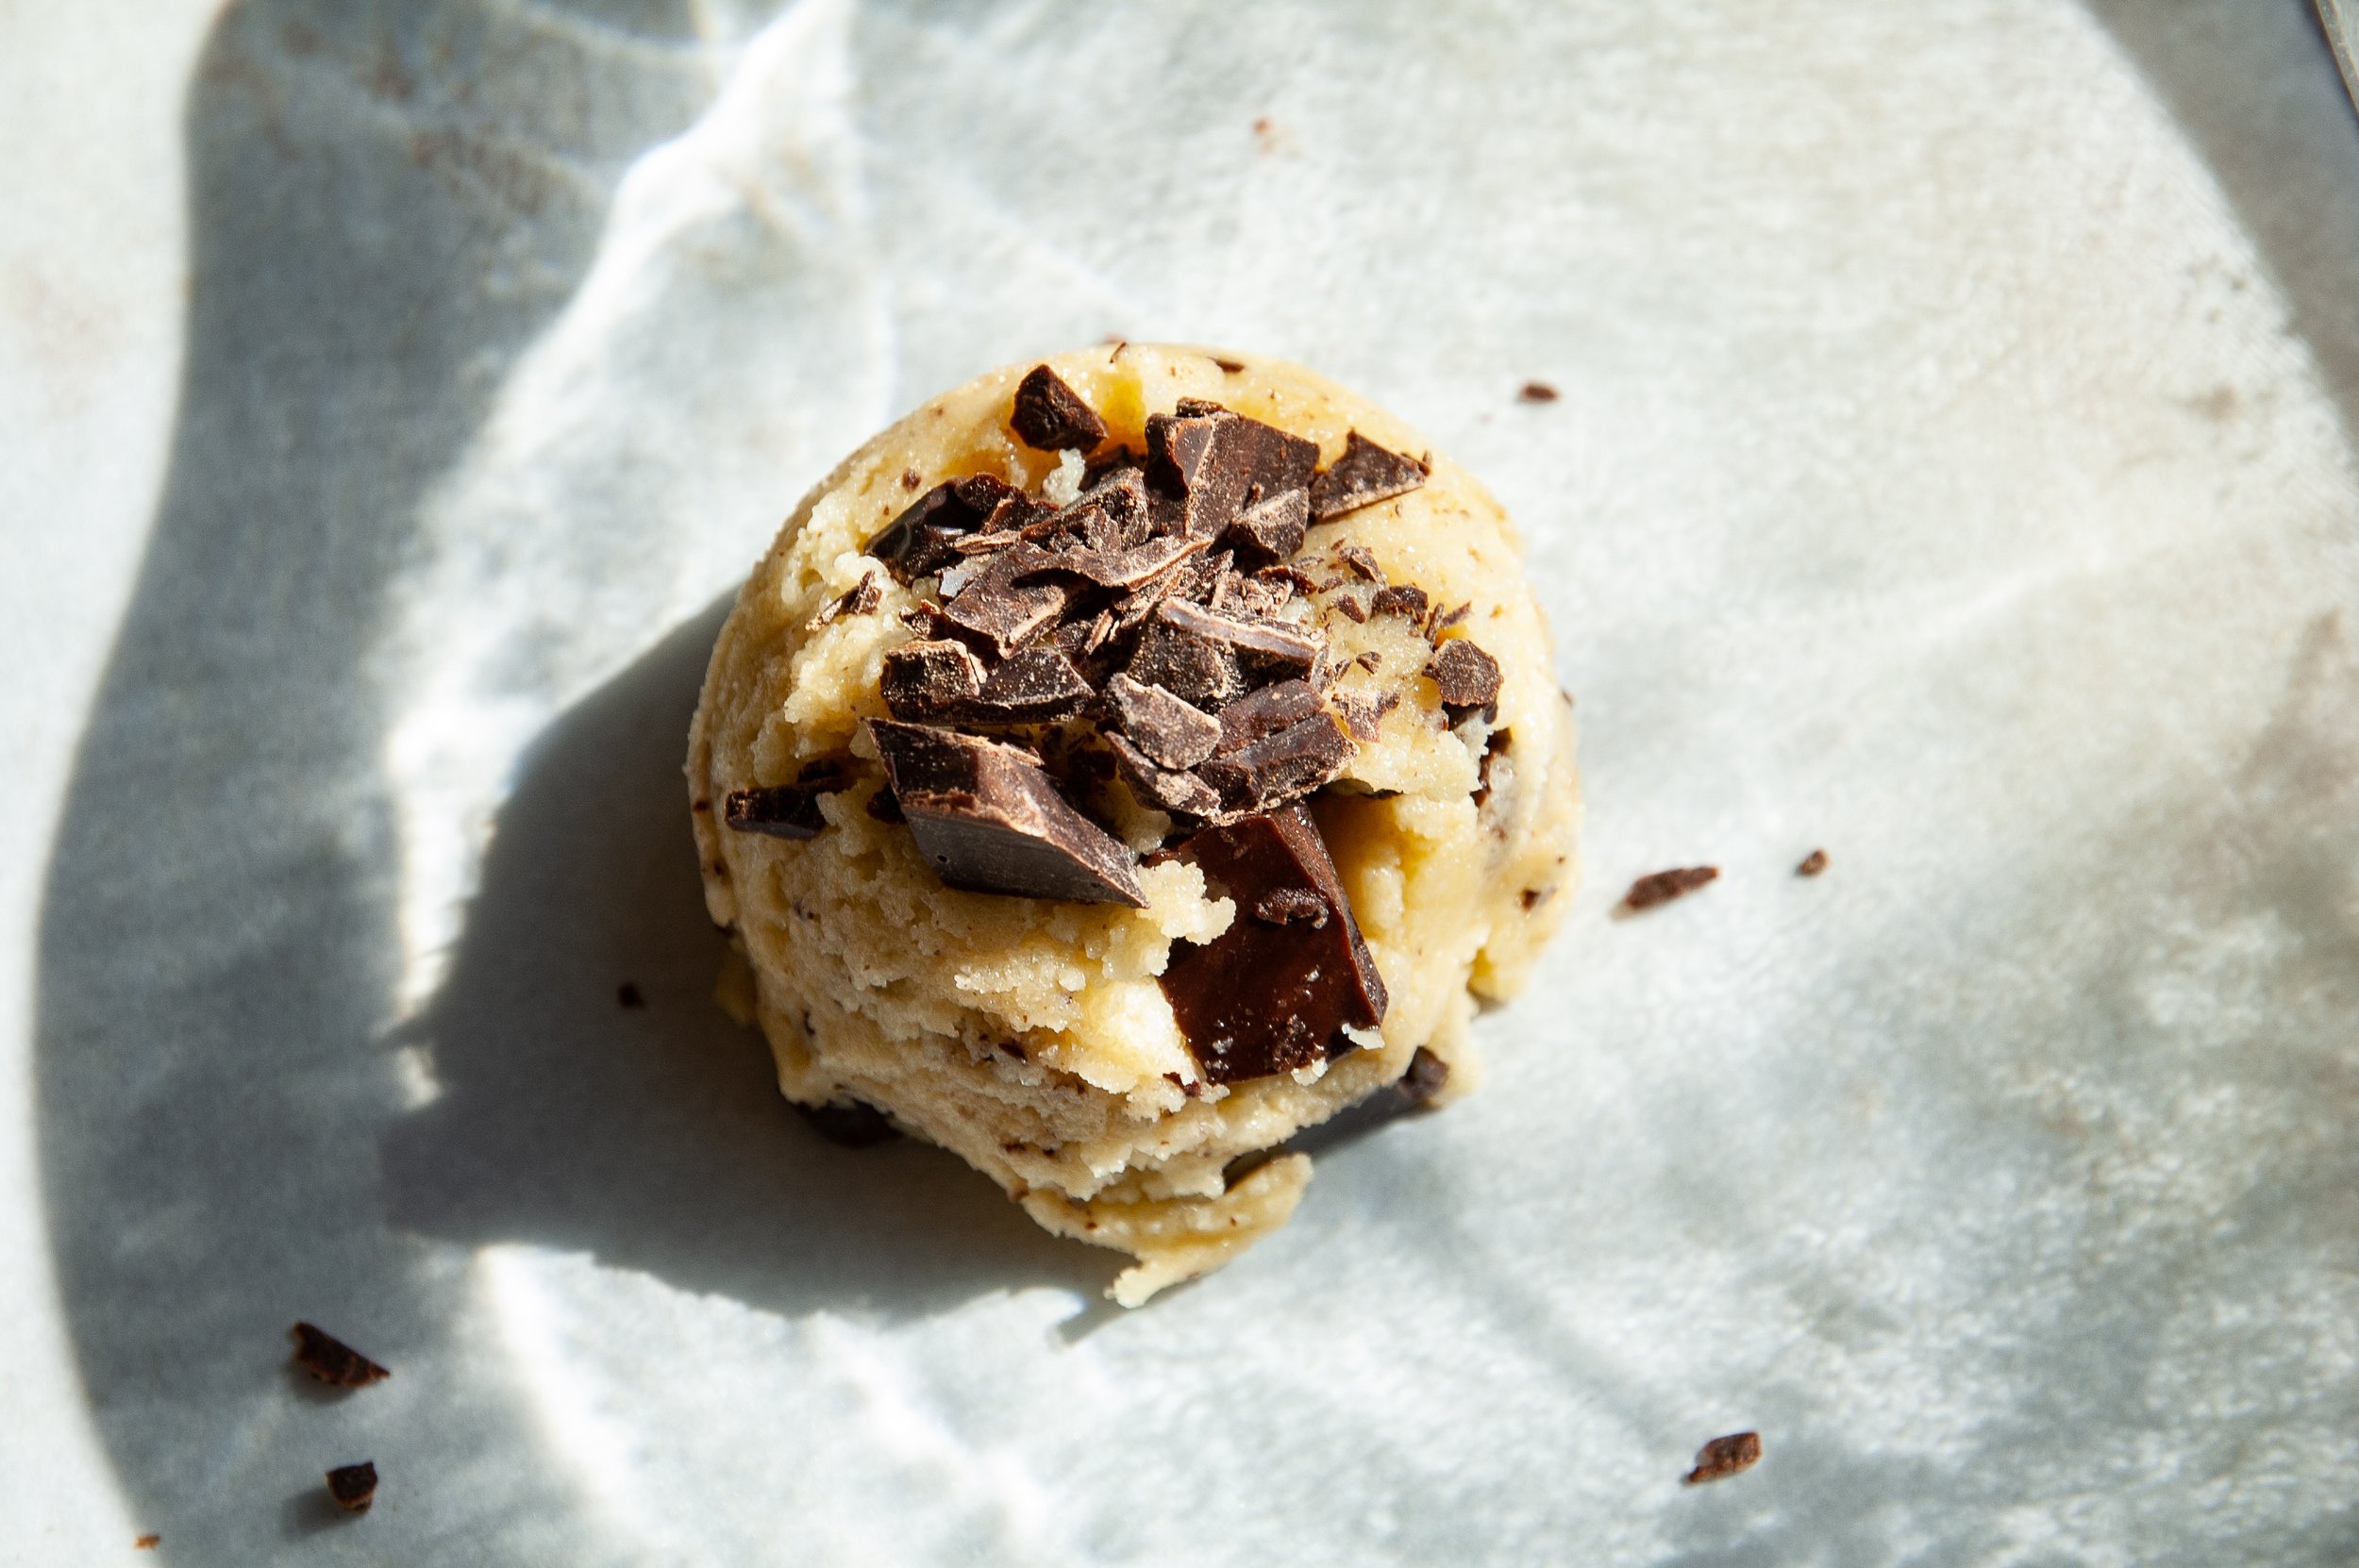 How to make Grain-Free Chocolate Chip Cookies